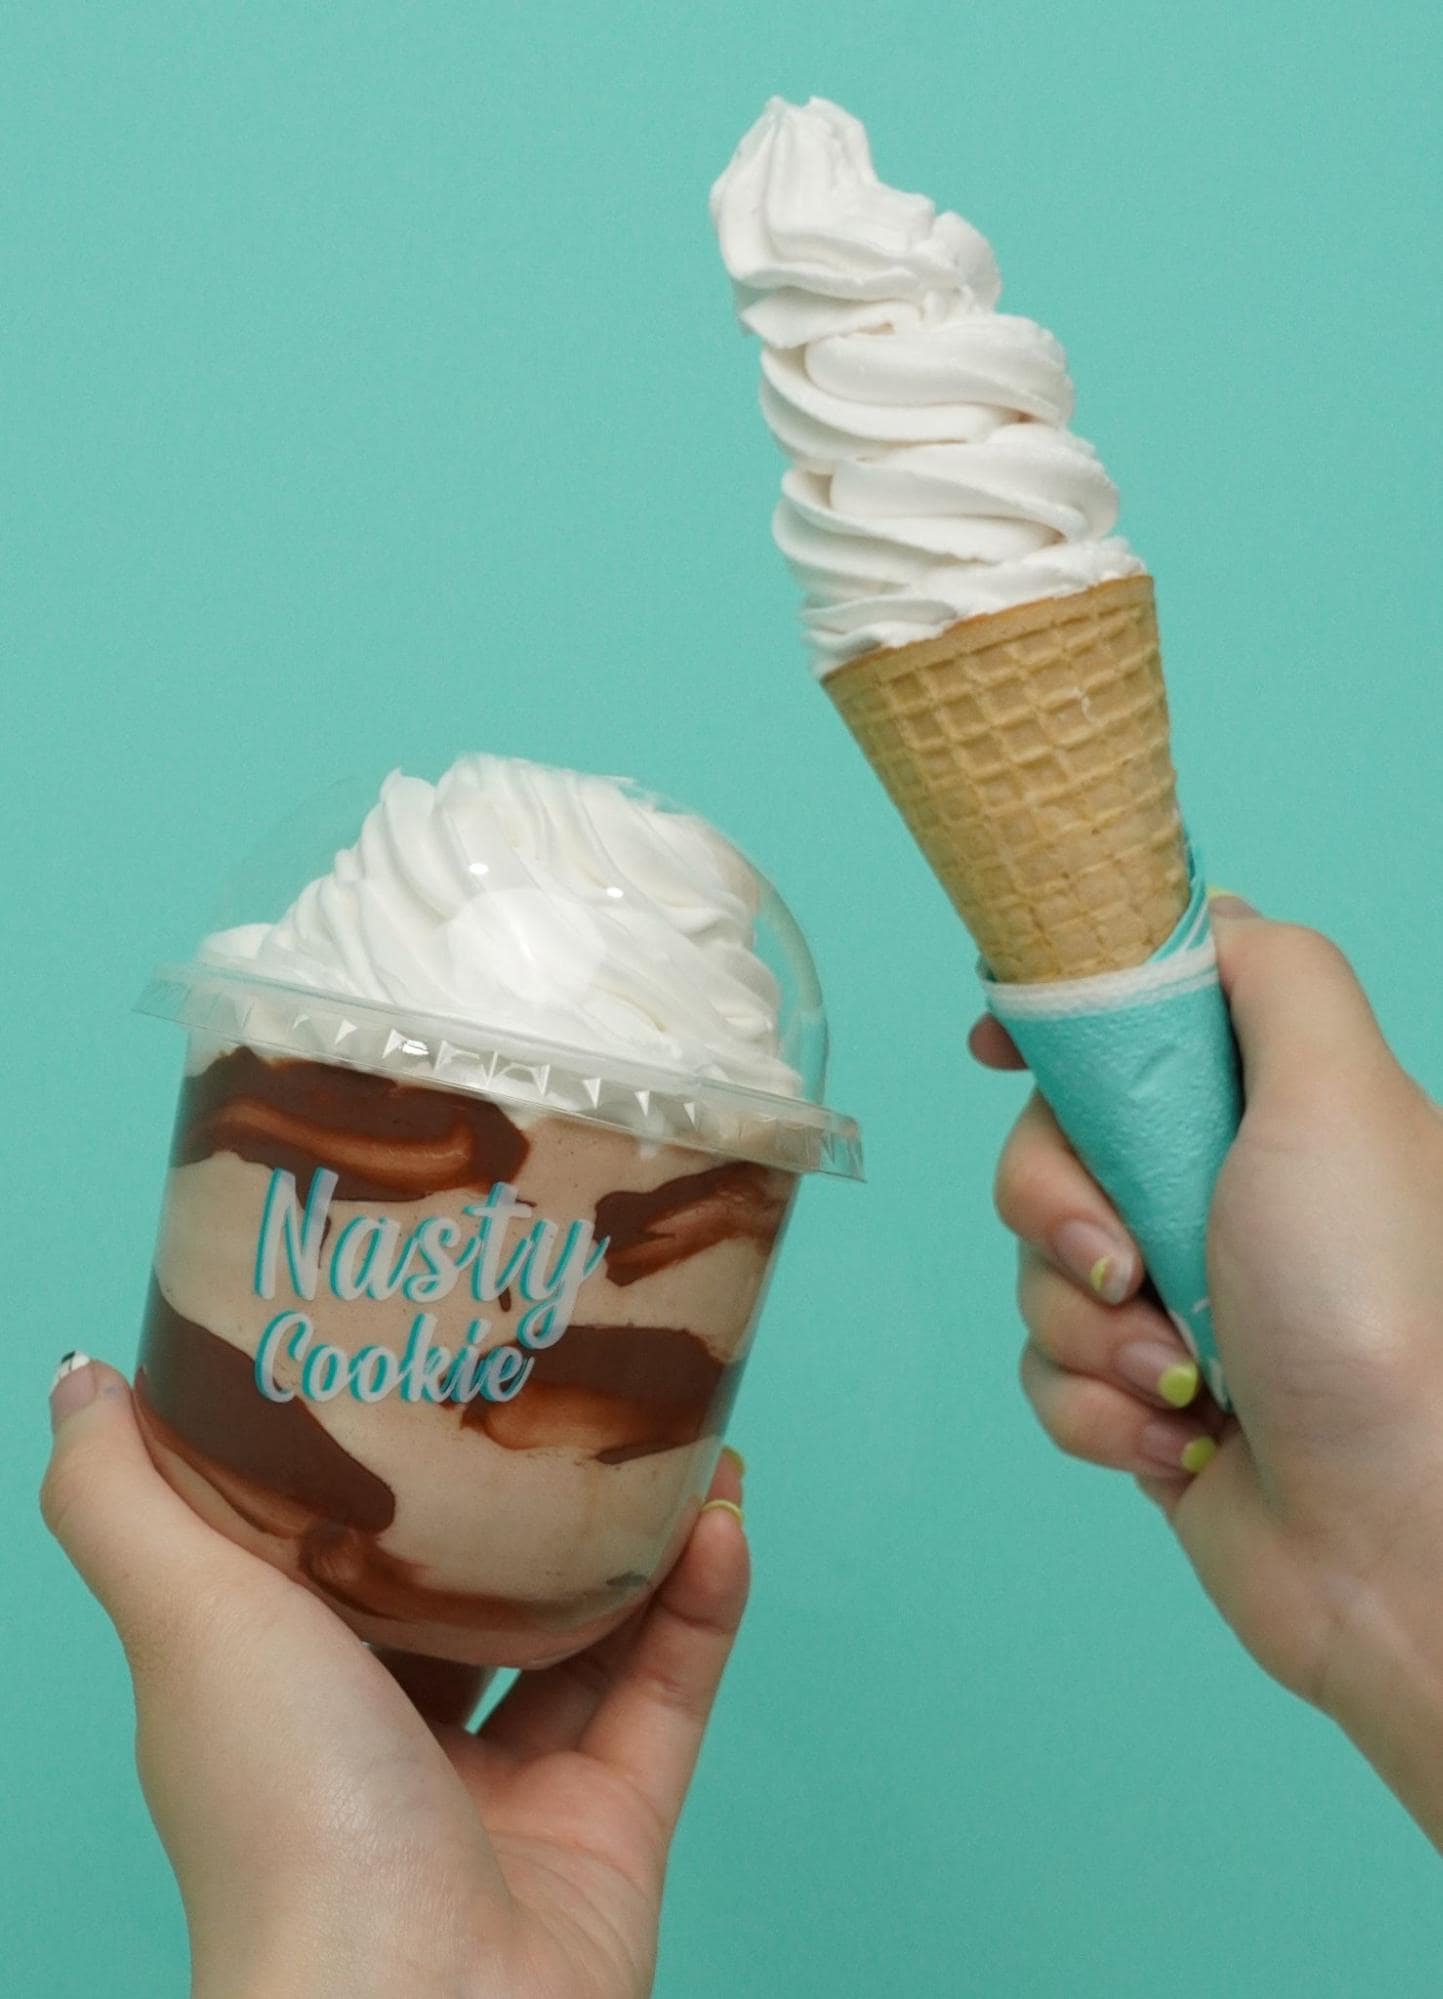 nasty cookie - ice cream and milkshake